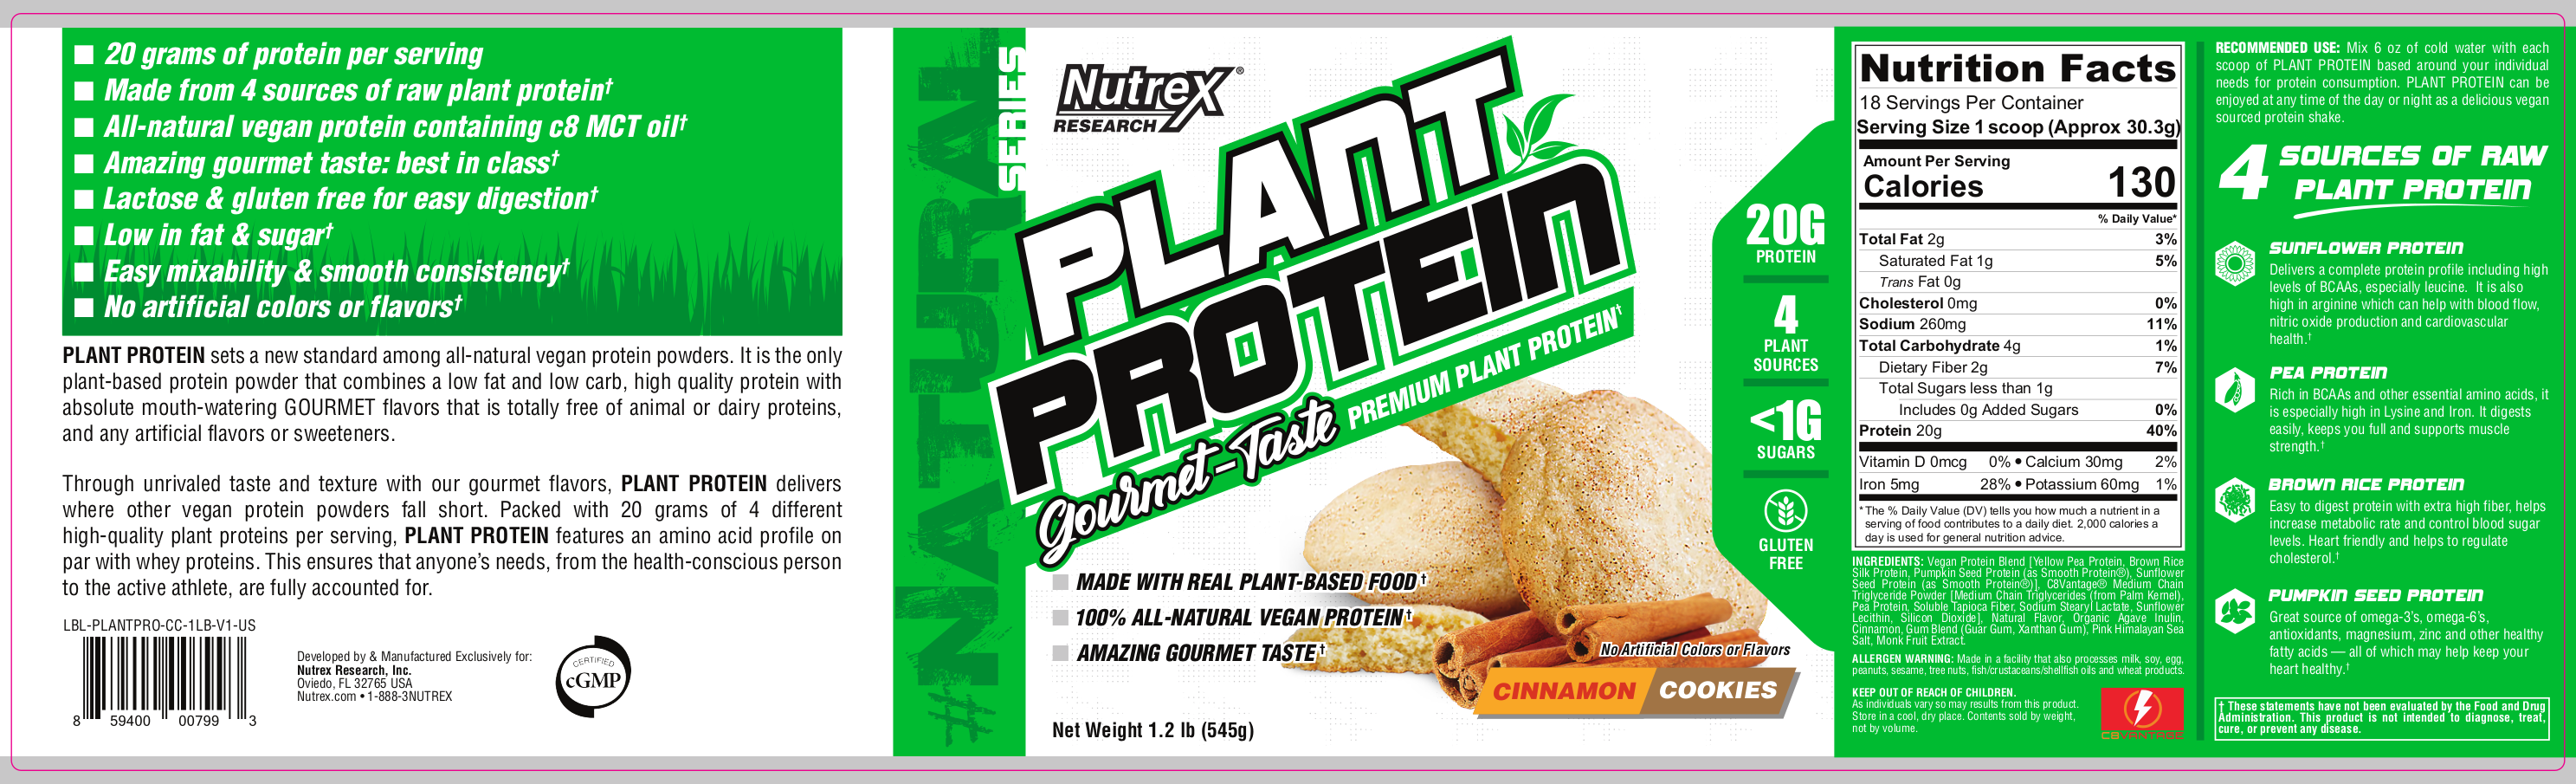 Nutrex Plant Protein: Vegan & Natural, yet Stevia-Free!